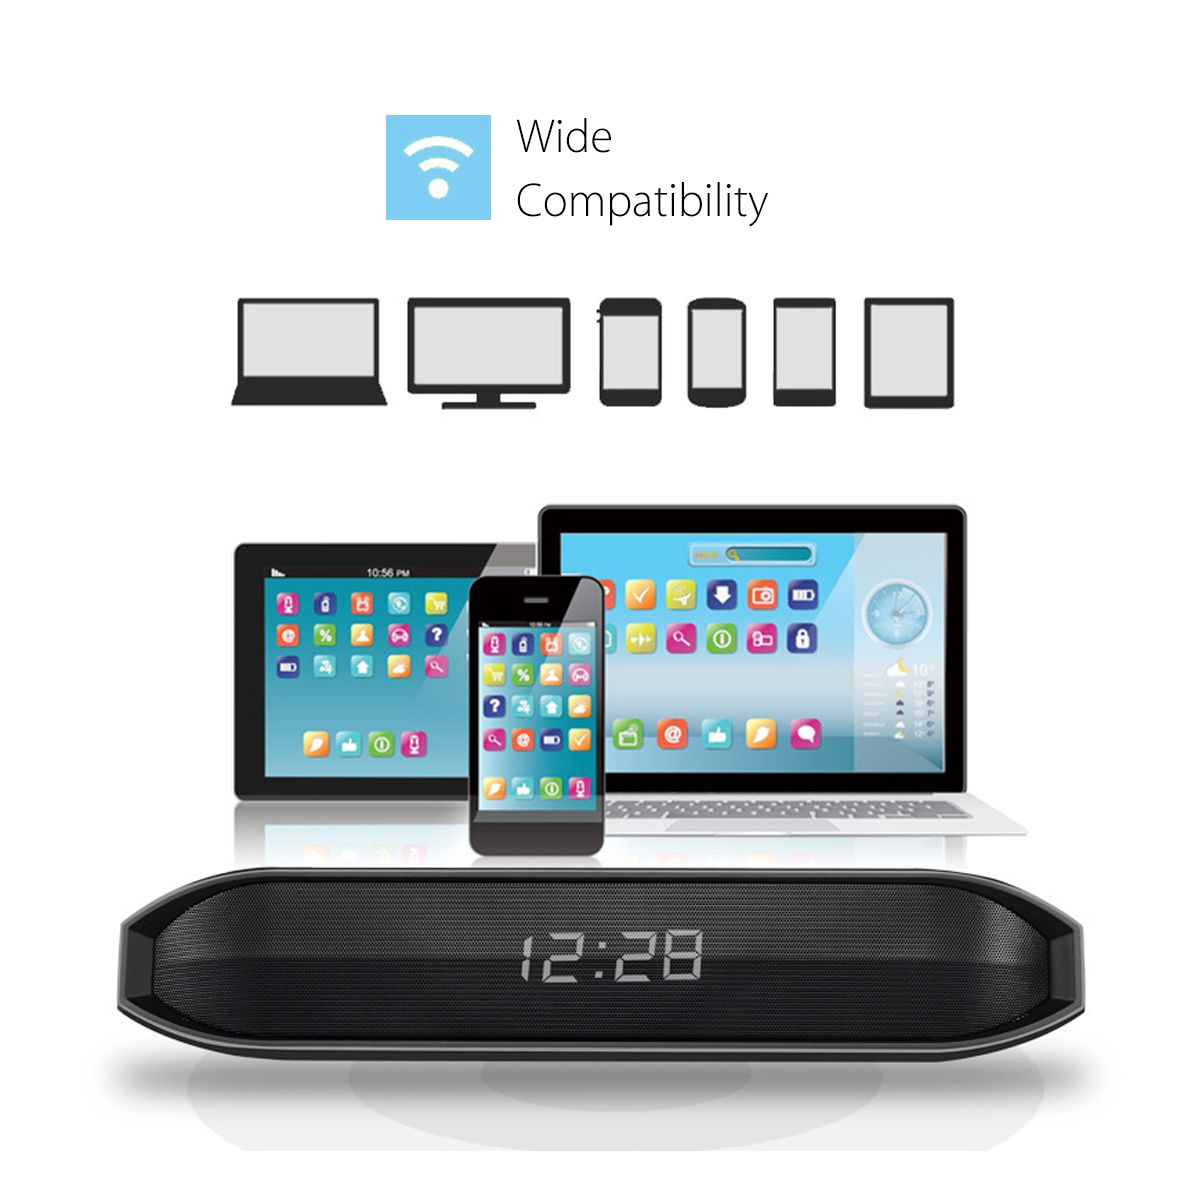 10W-Wireless-bluetooth-Speaker-Soundbar-3D-Stereo-FM-Radio-TF-Card-AUX-Clock-Speaker-with-Mic-1634638